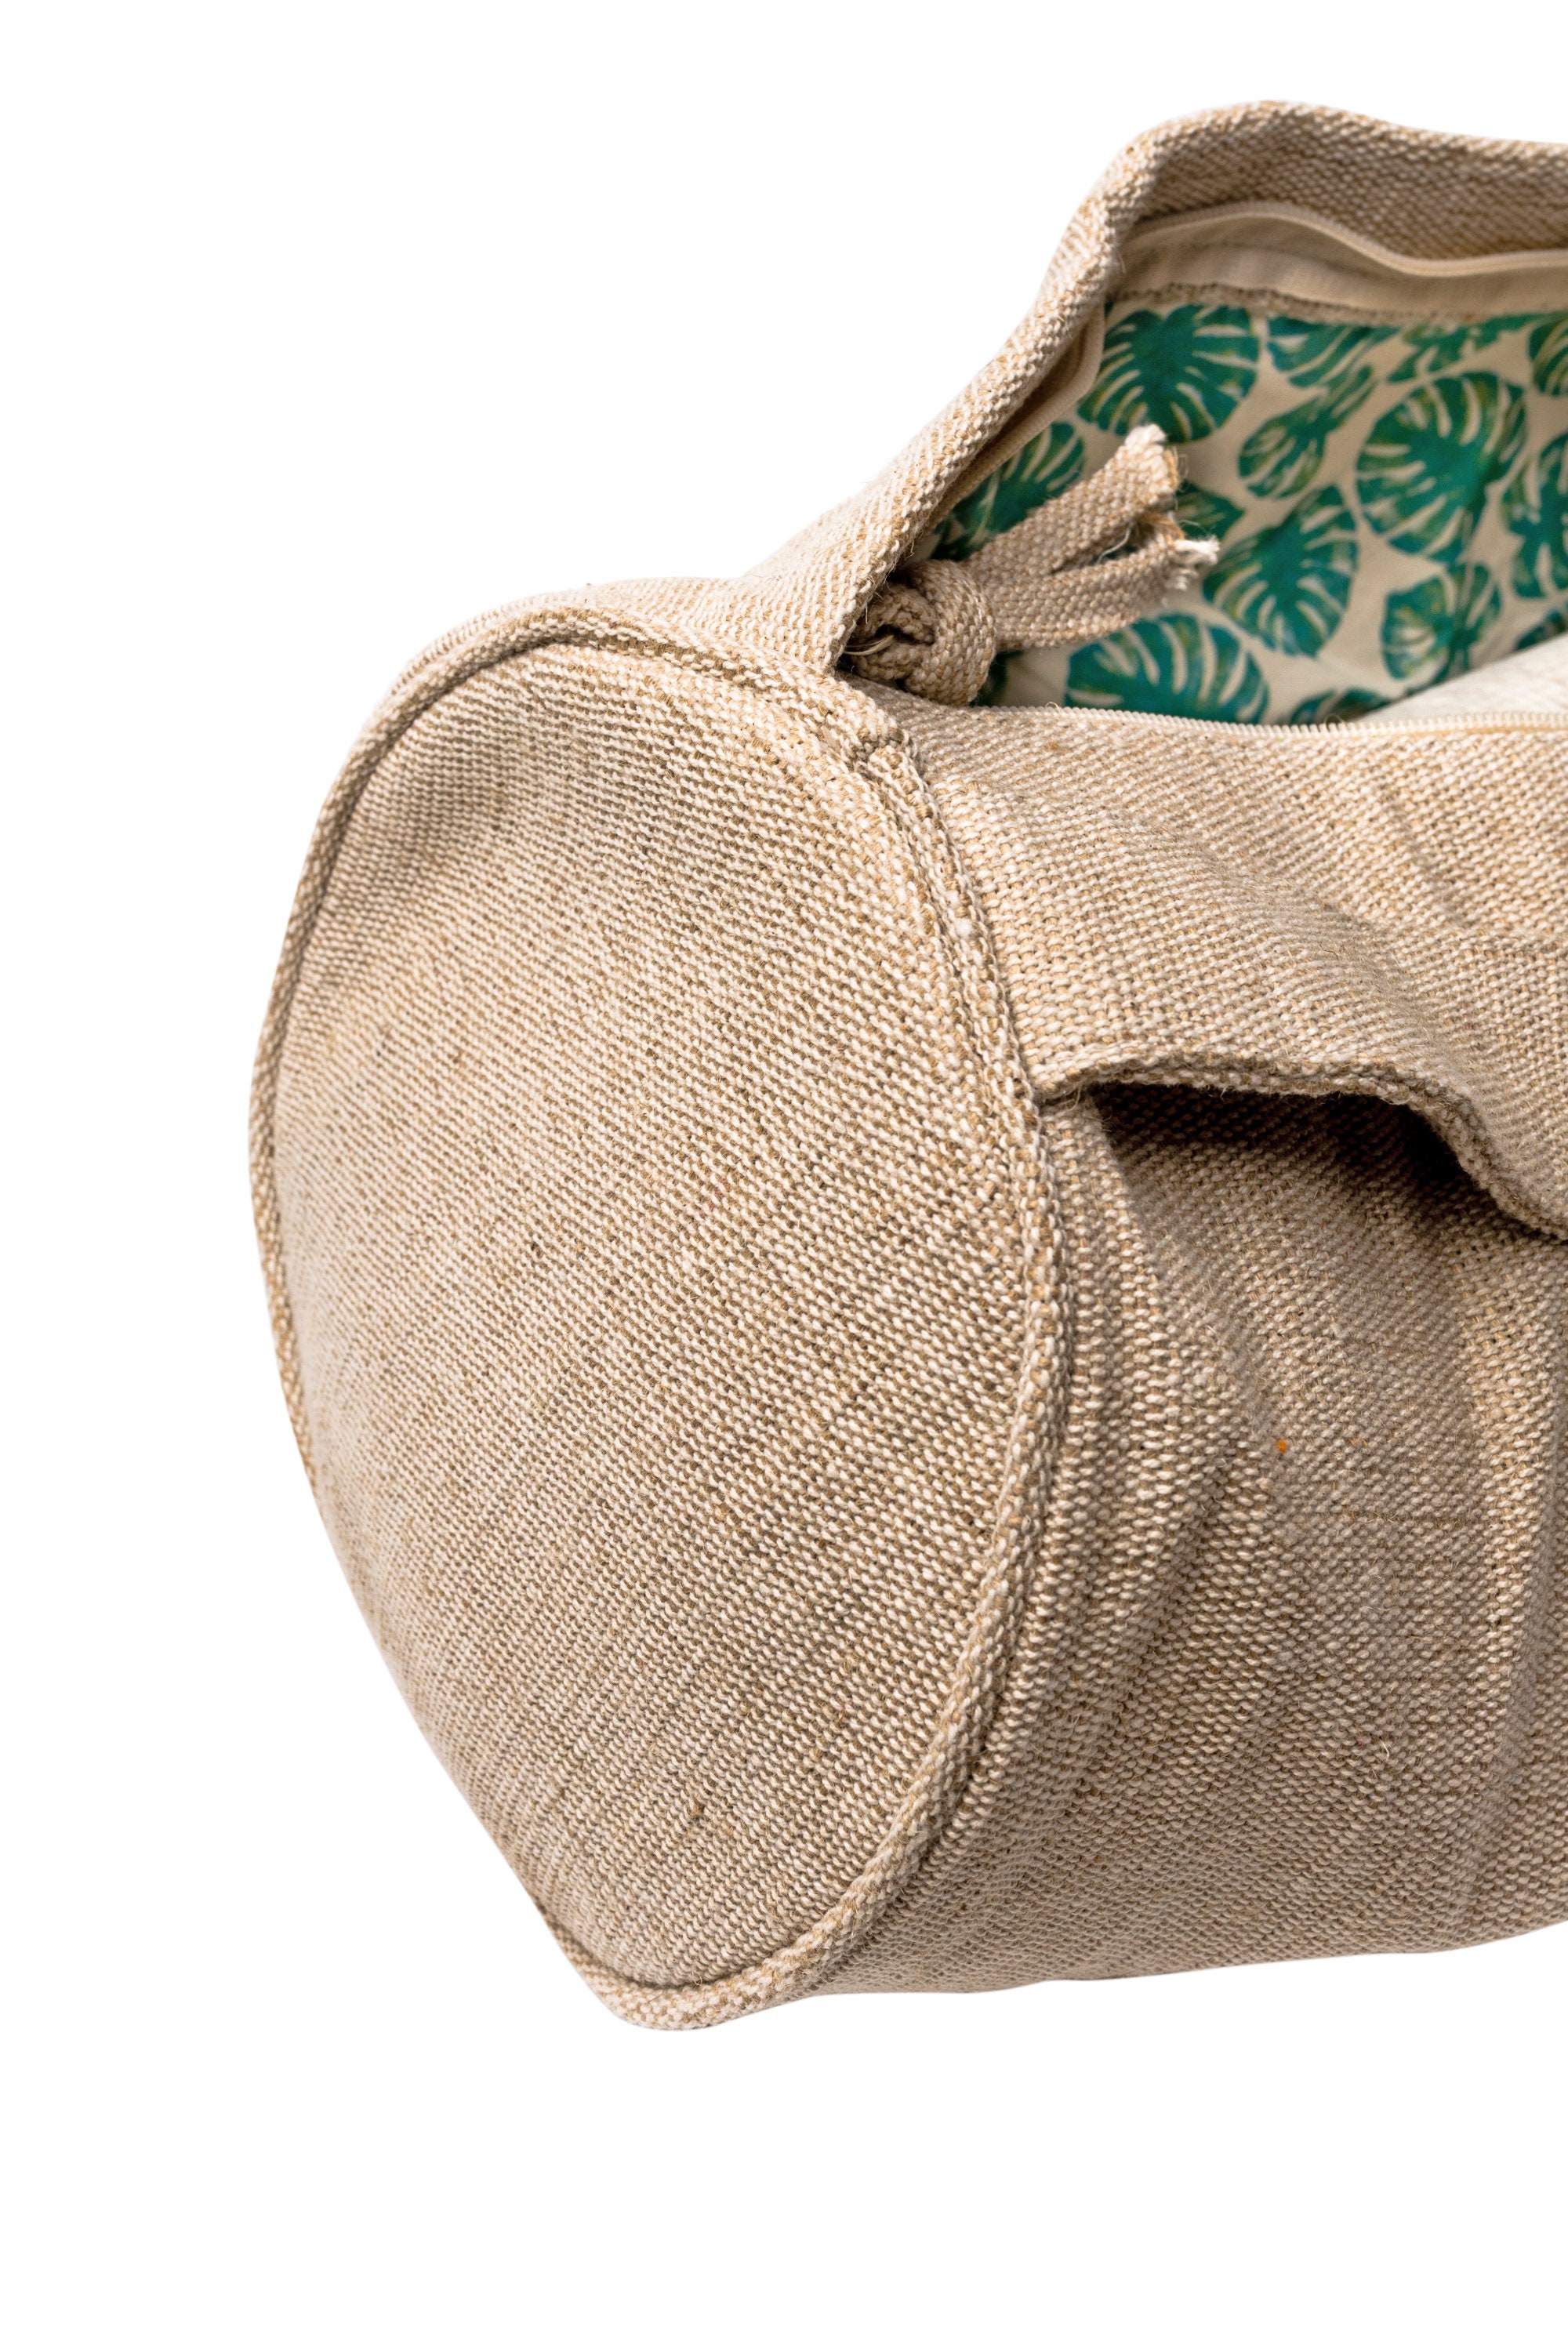 YogaPets Full Zip Exercise Cute Yoga Mat Tote Bag with Plush Animal Design